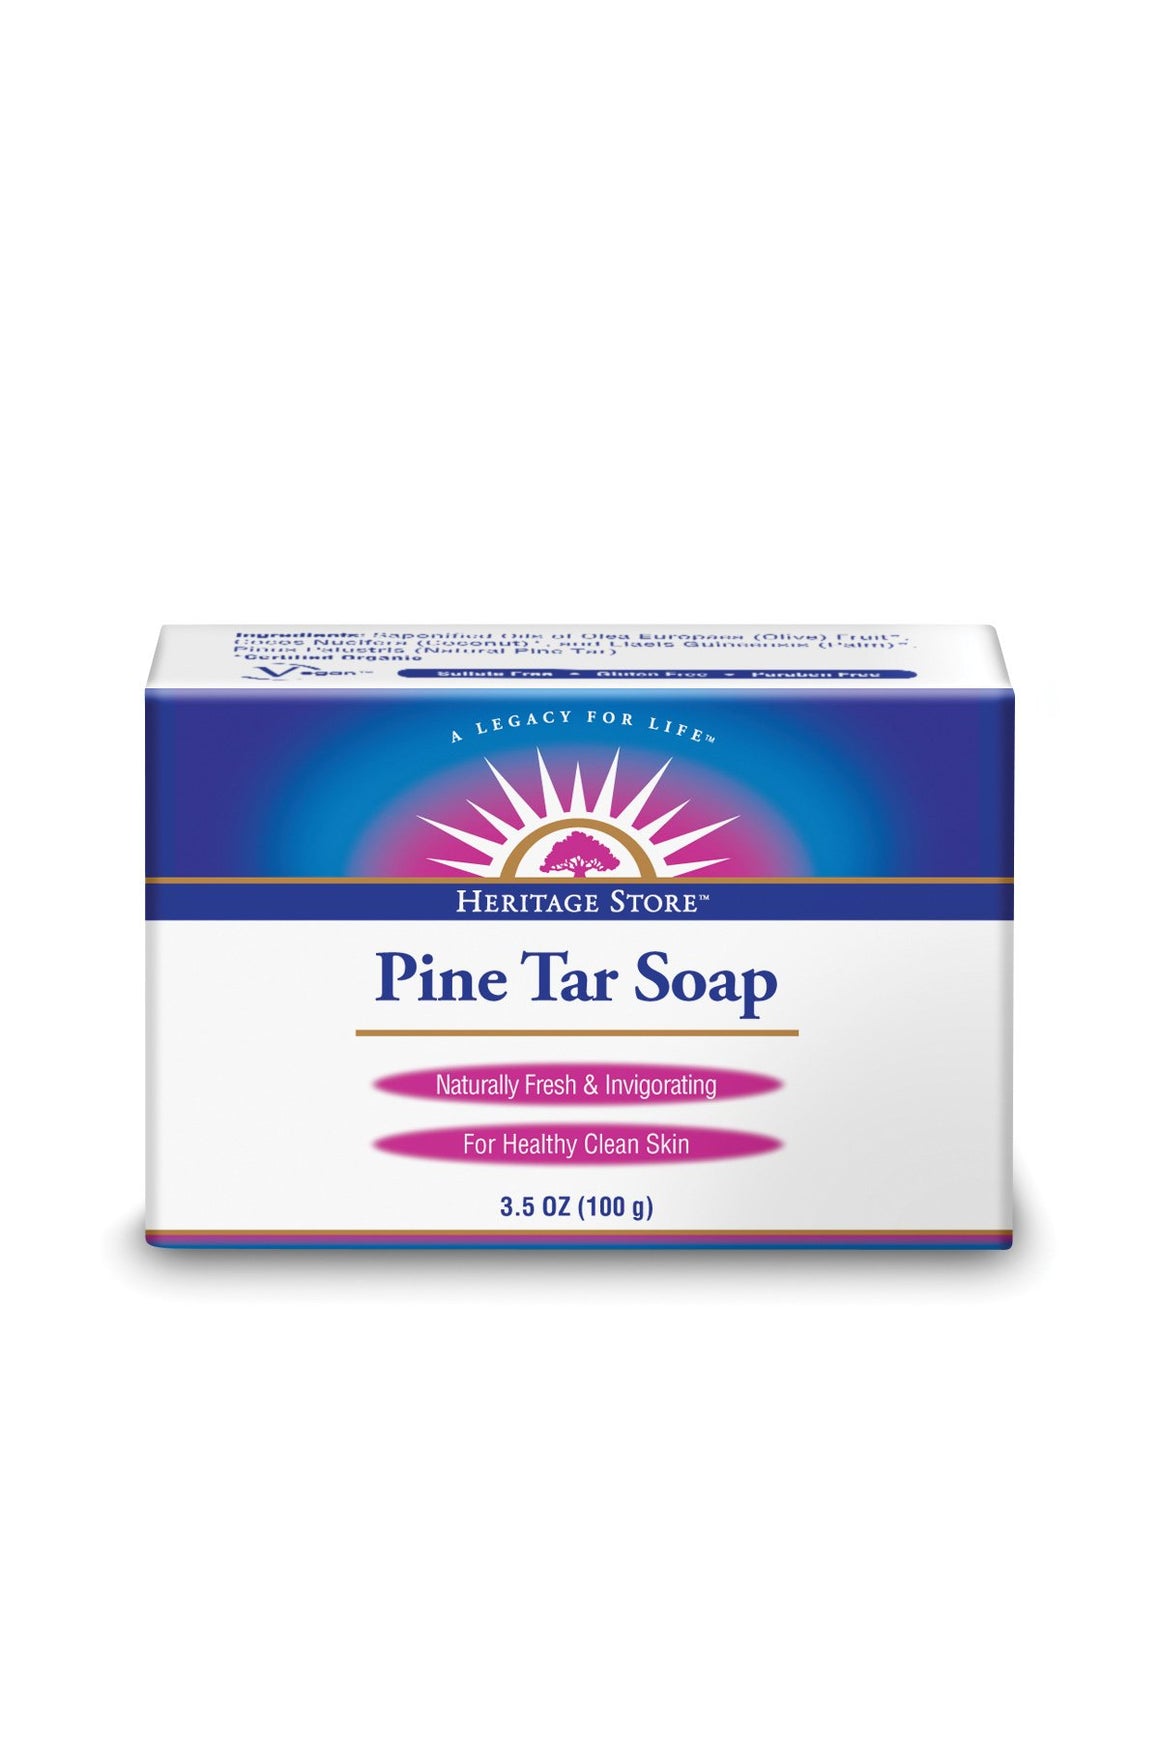  Pine Tar Soap - Heritage Store